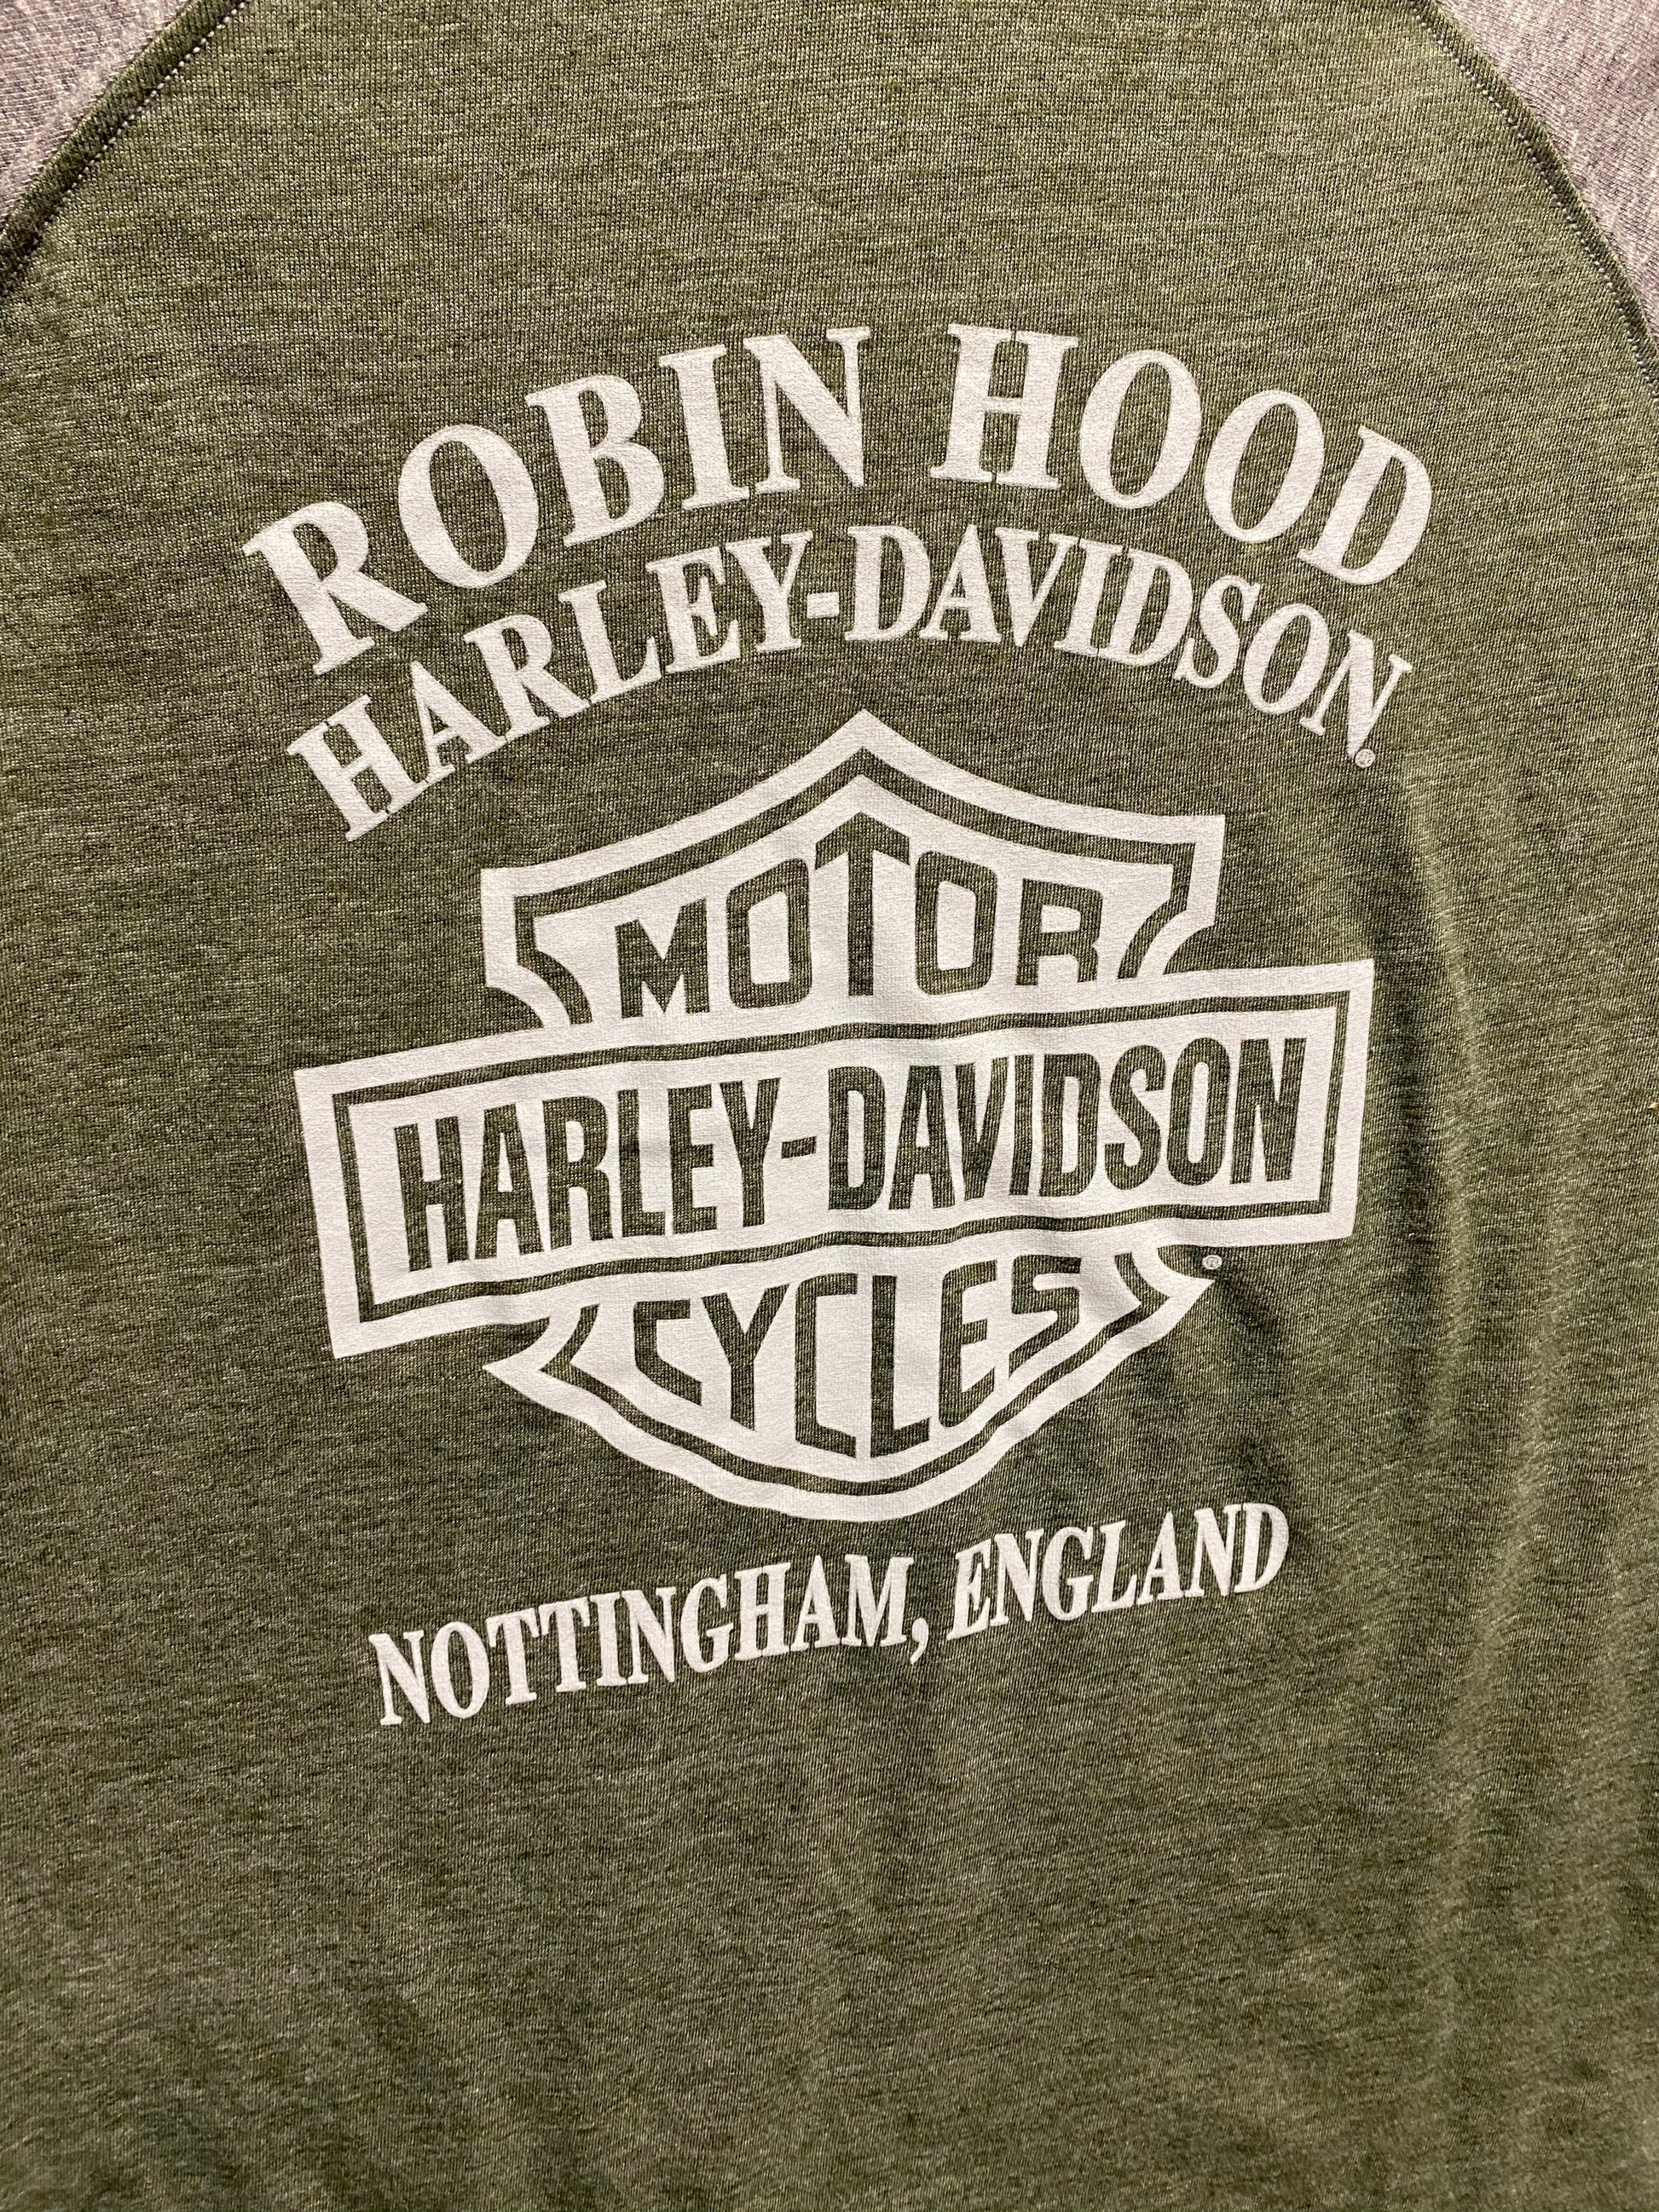 Harley Davidson Men’s 3/4 Sleeve Tough Luck T-Shirt